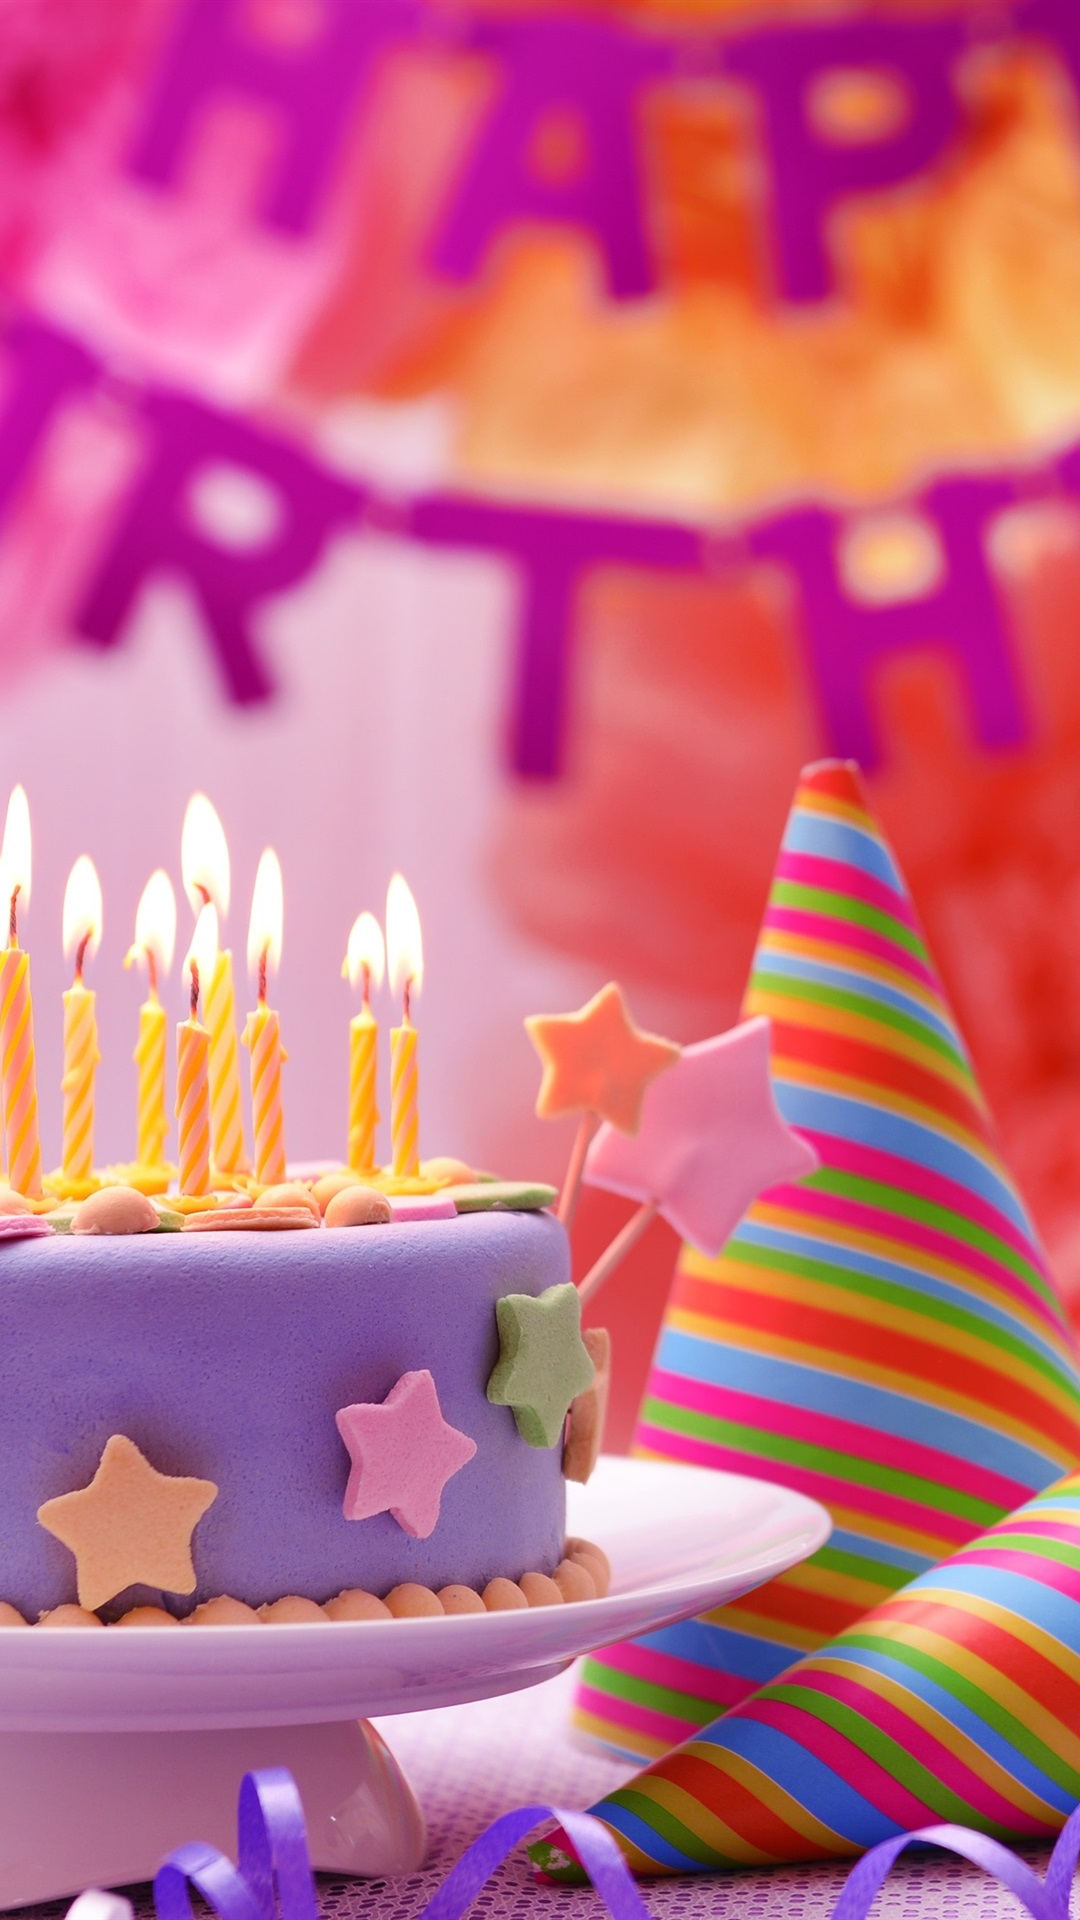 Iphone Wallpaper Happy Birthday Cake Colorful Decoration Bright Cake Background 1080x19 Wallpaper Teahub Io